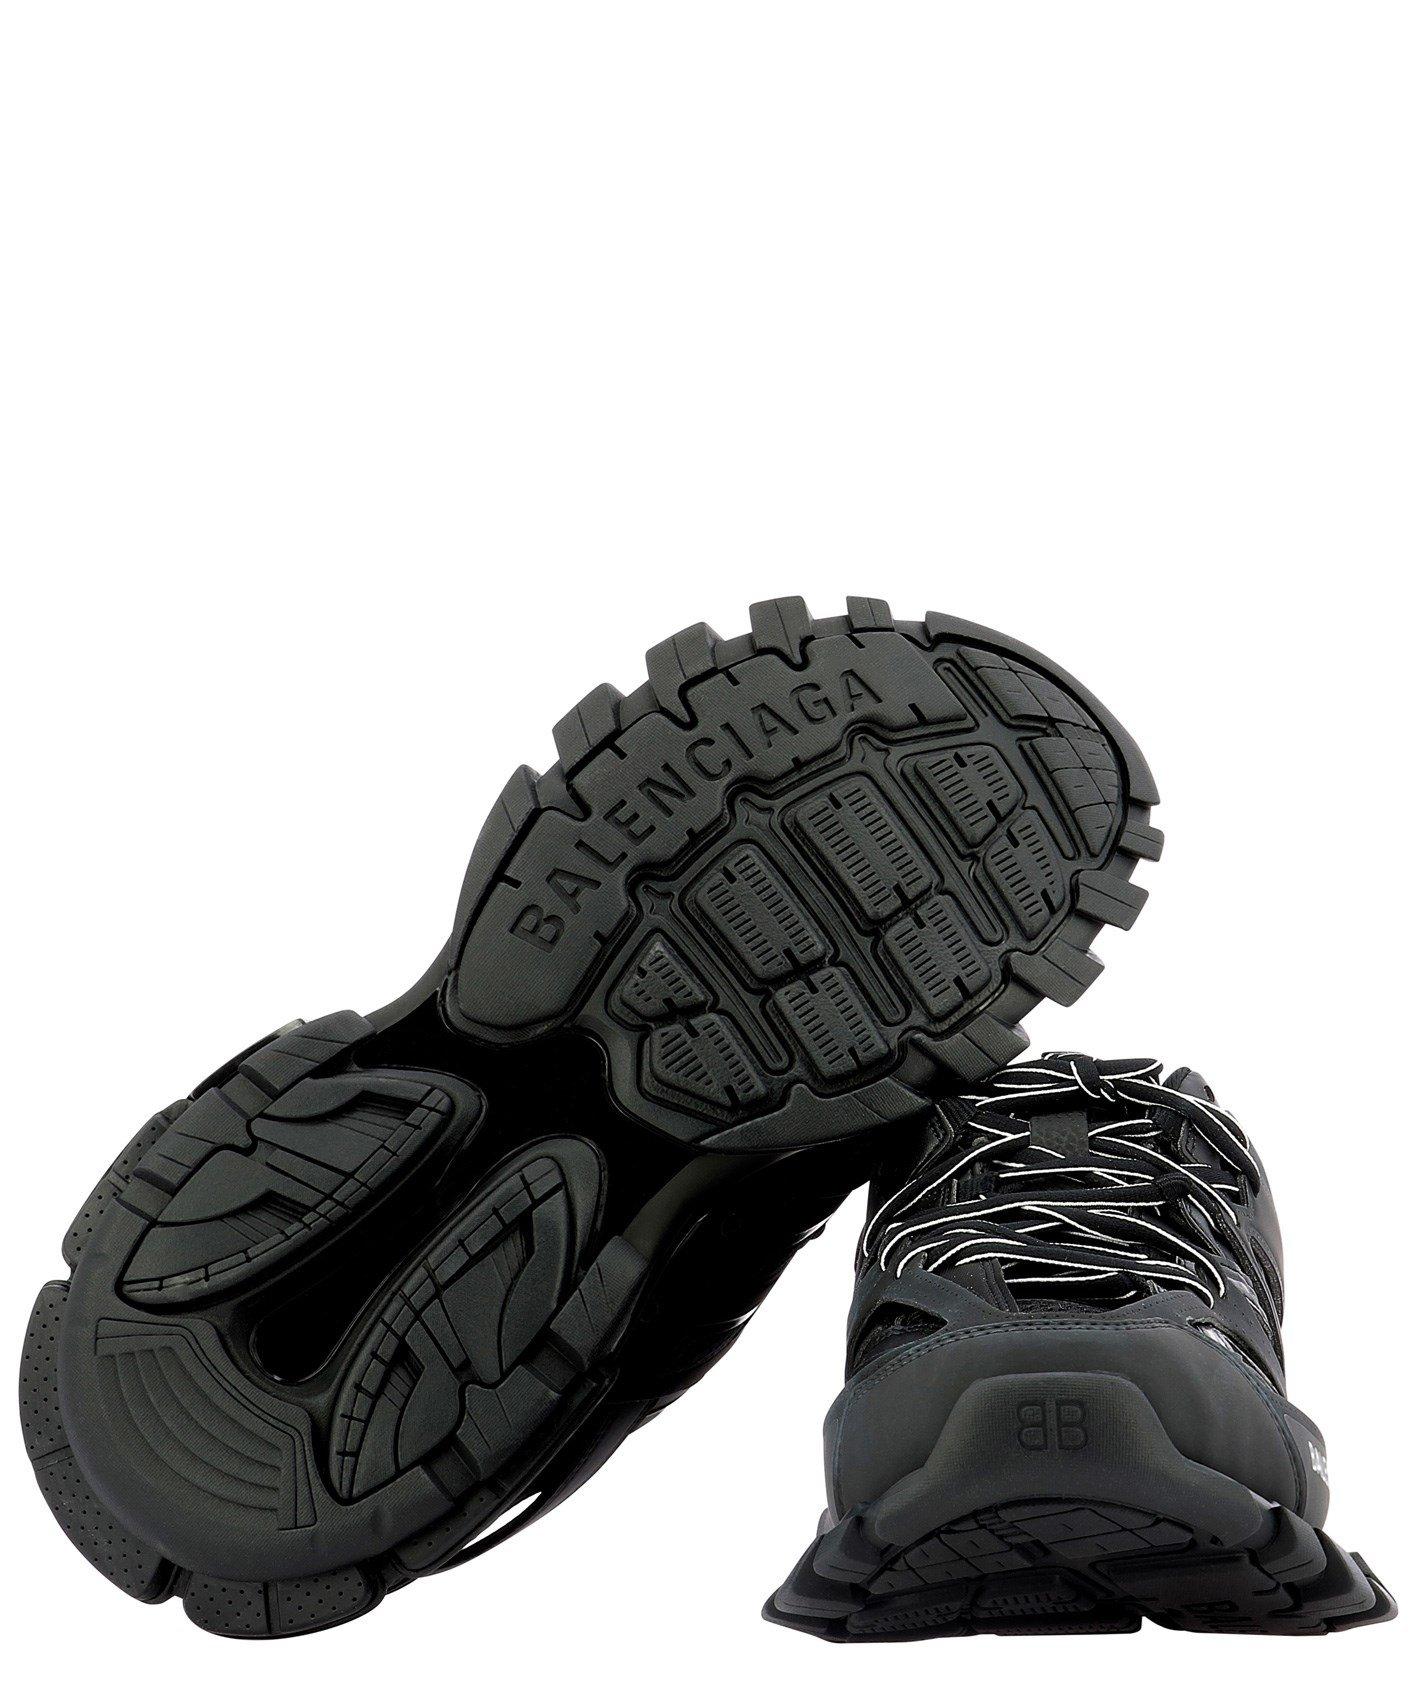 black balenciaga track sneakers